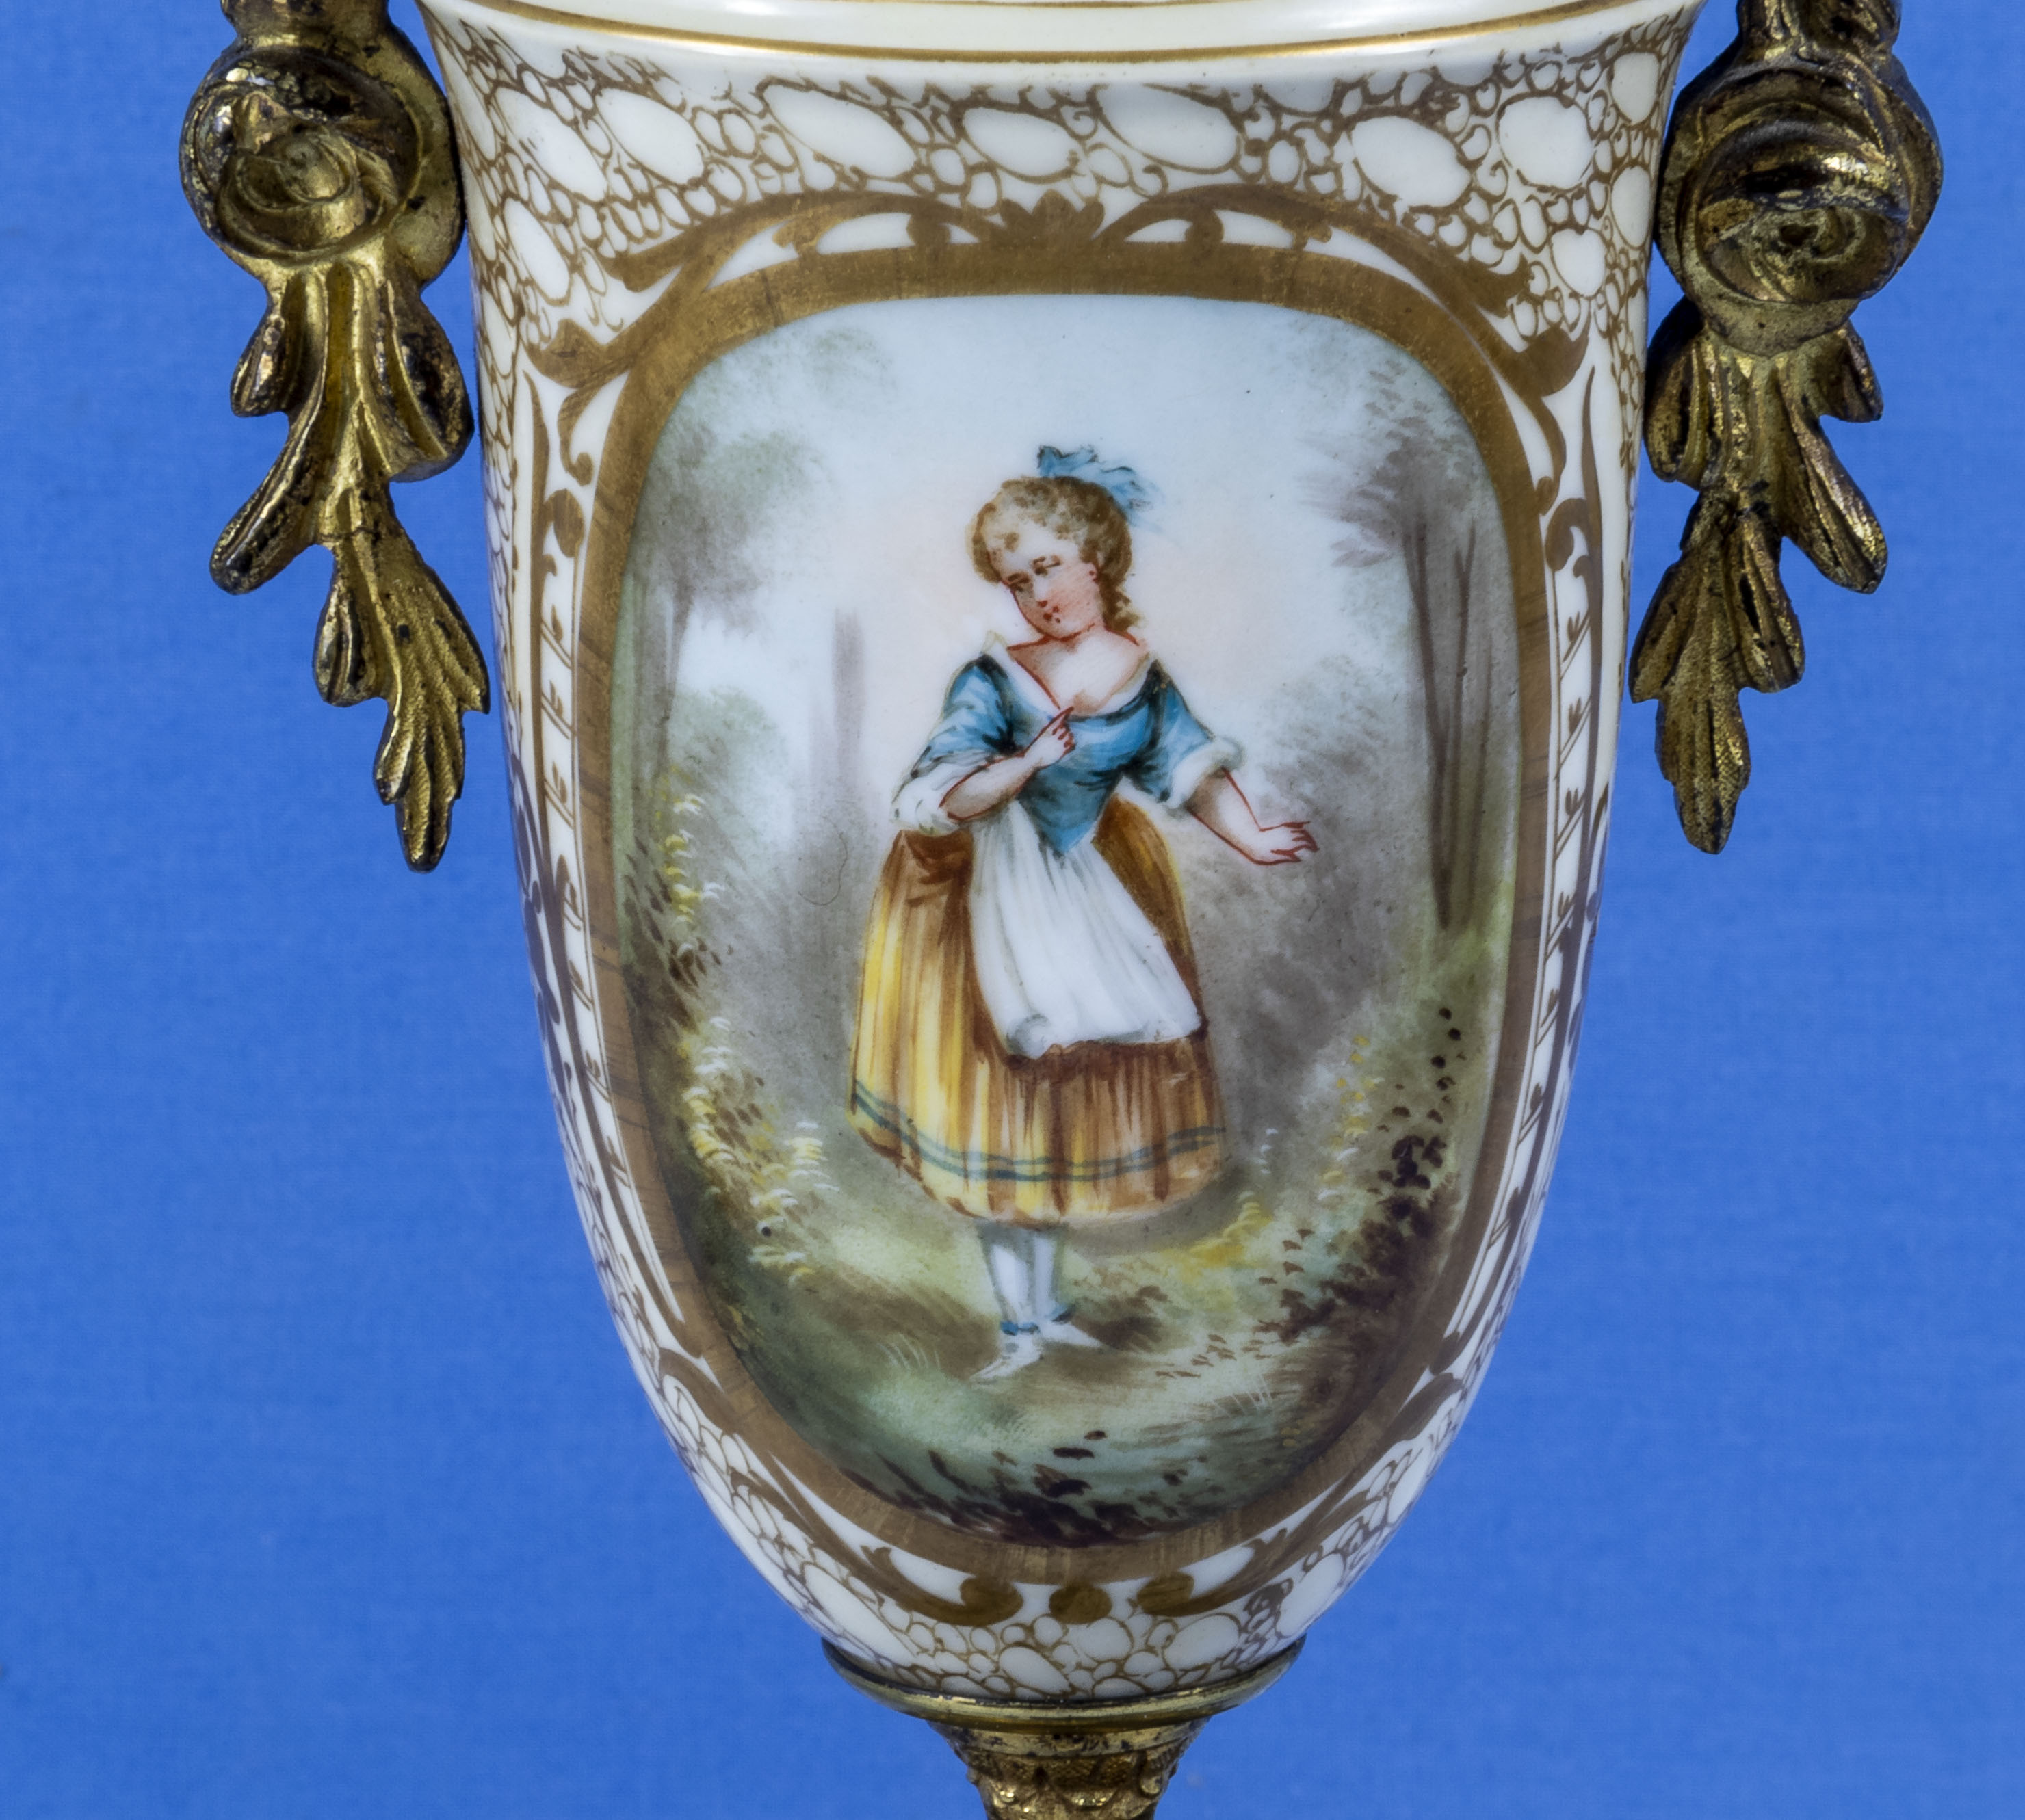 Antique French ormolu Serves vase - Image 6 of 7